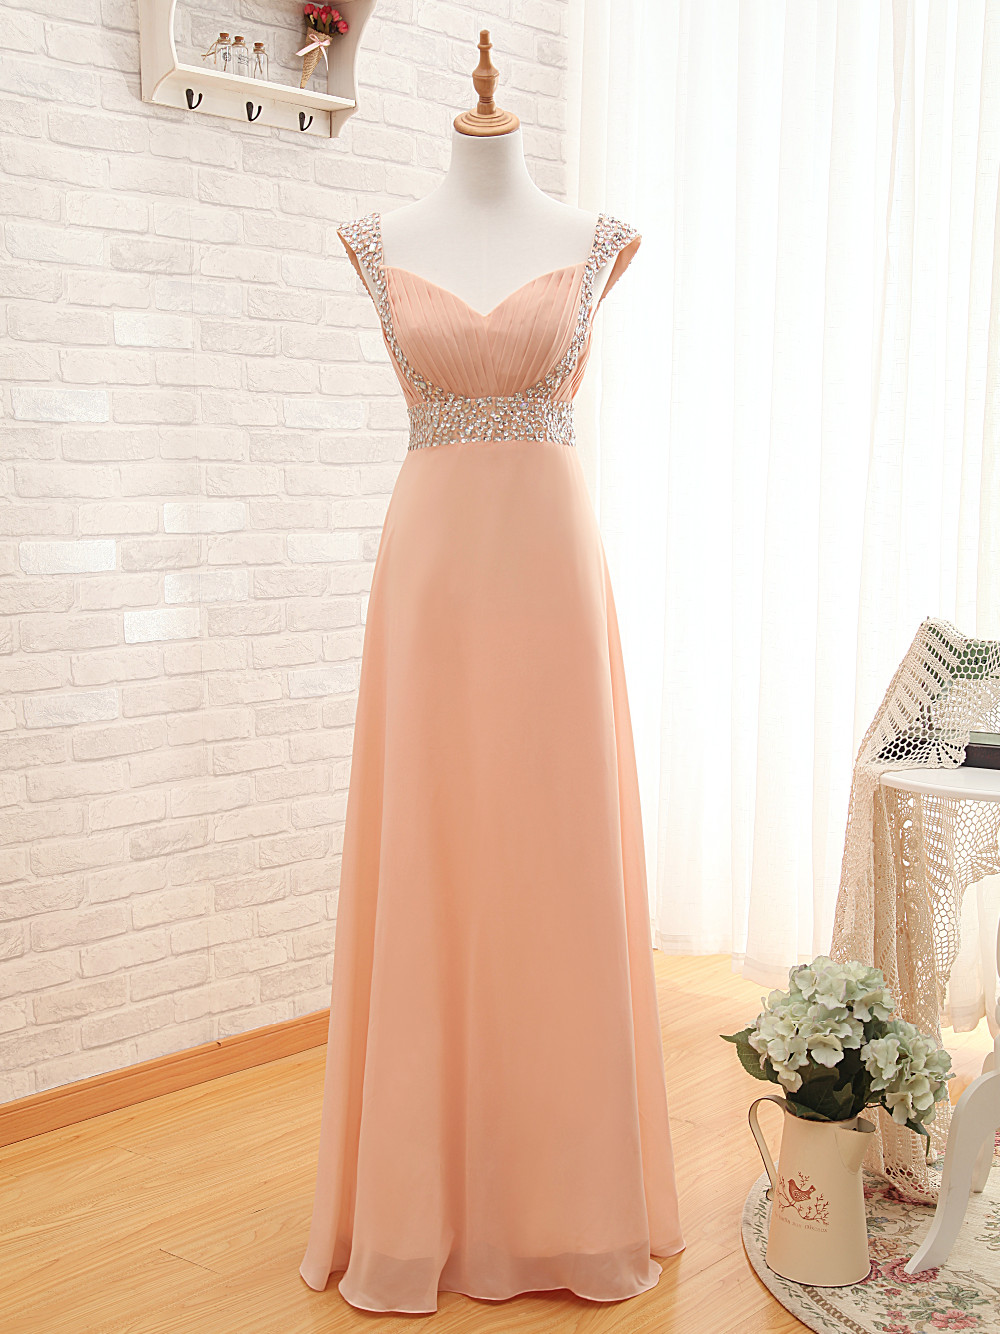 Elegant Sweetheart Cap Sleeves Beaded Chiffon Formal Prom Dress, Beautiful Prom Dress, Banquet Party Dress